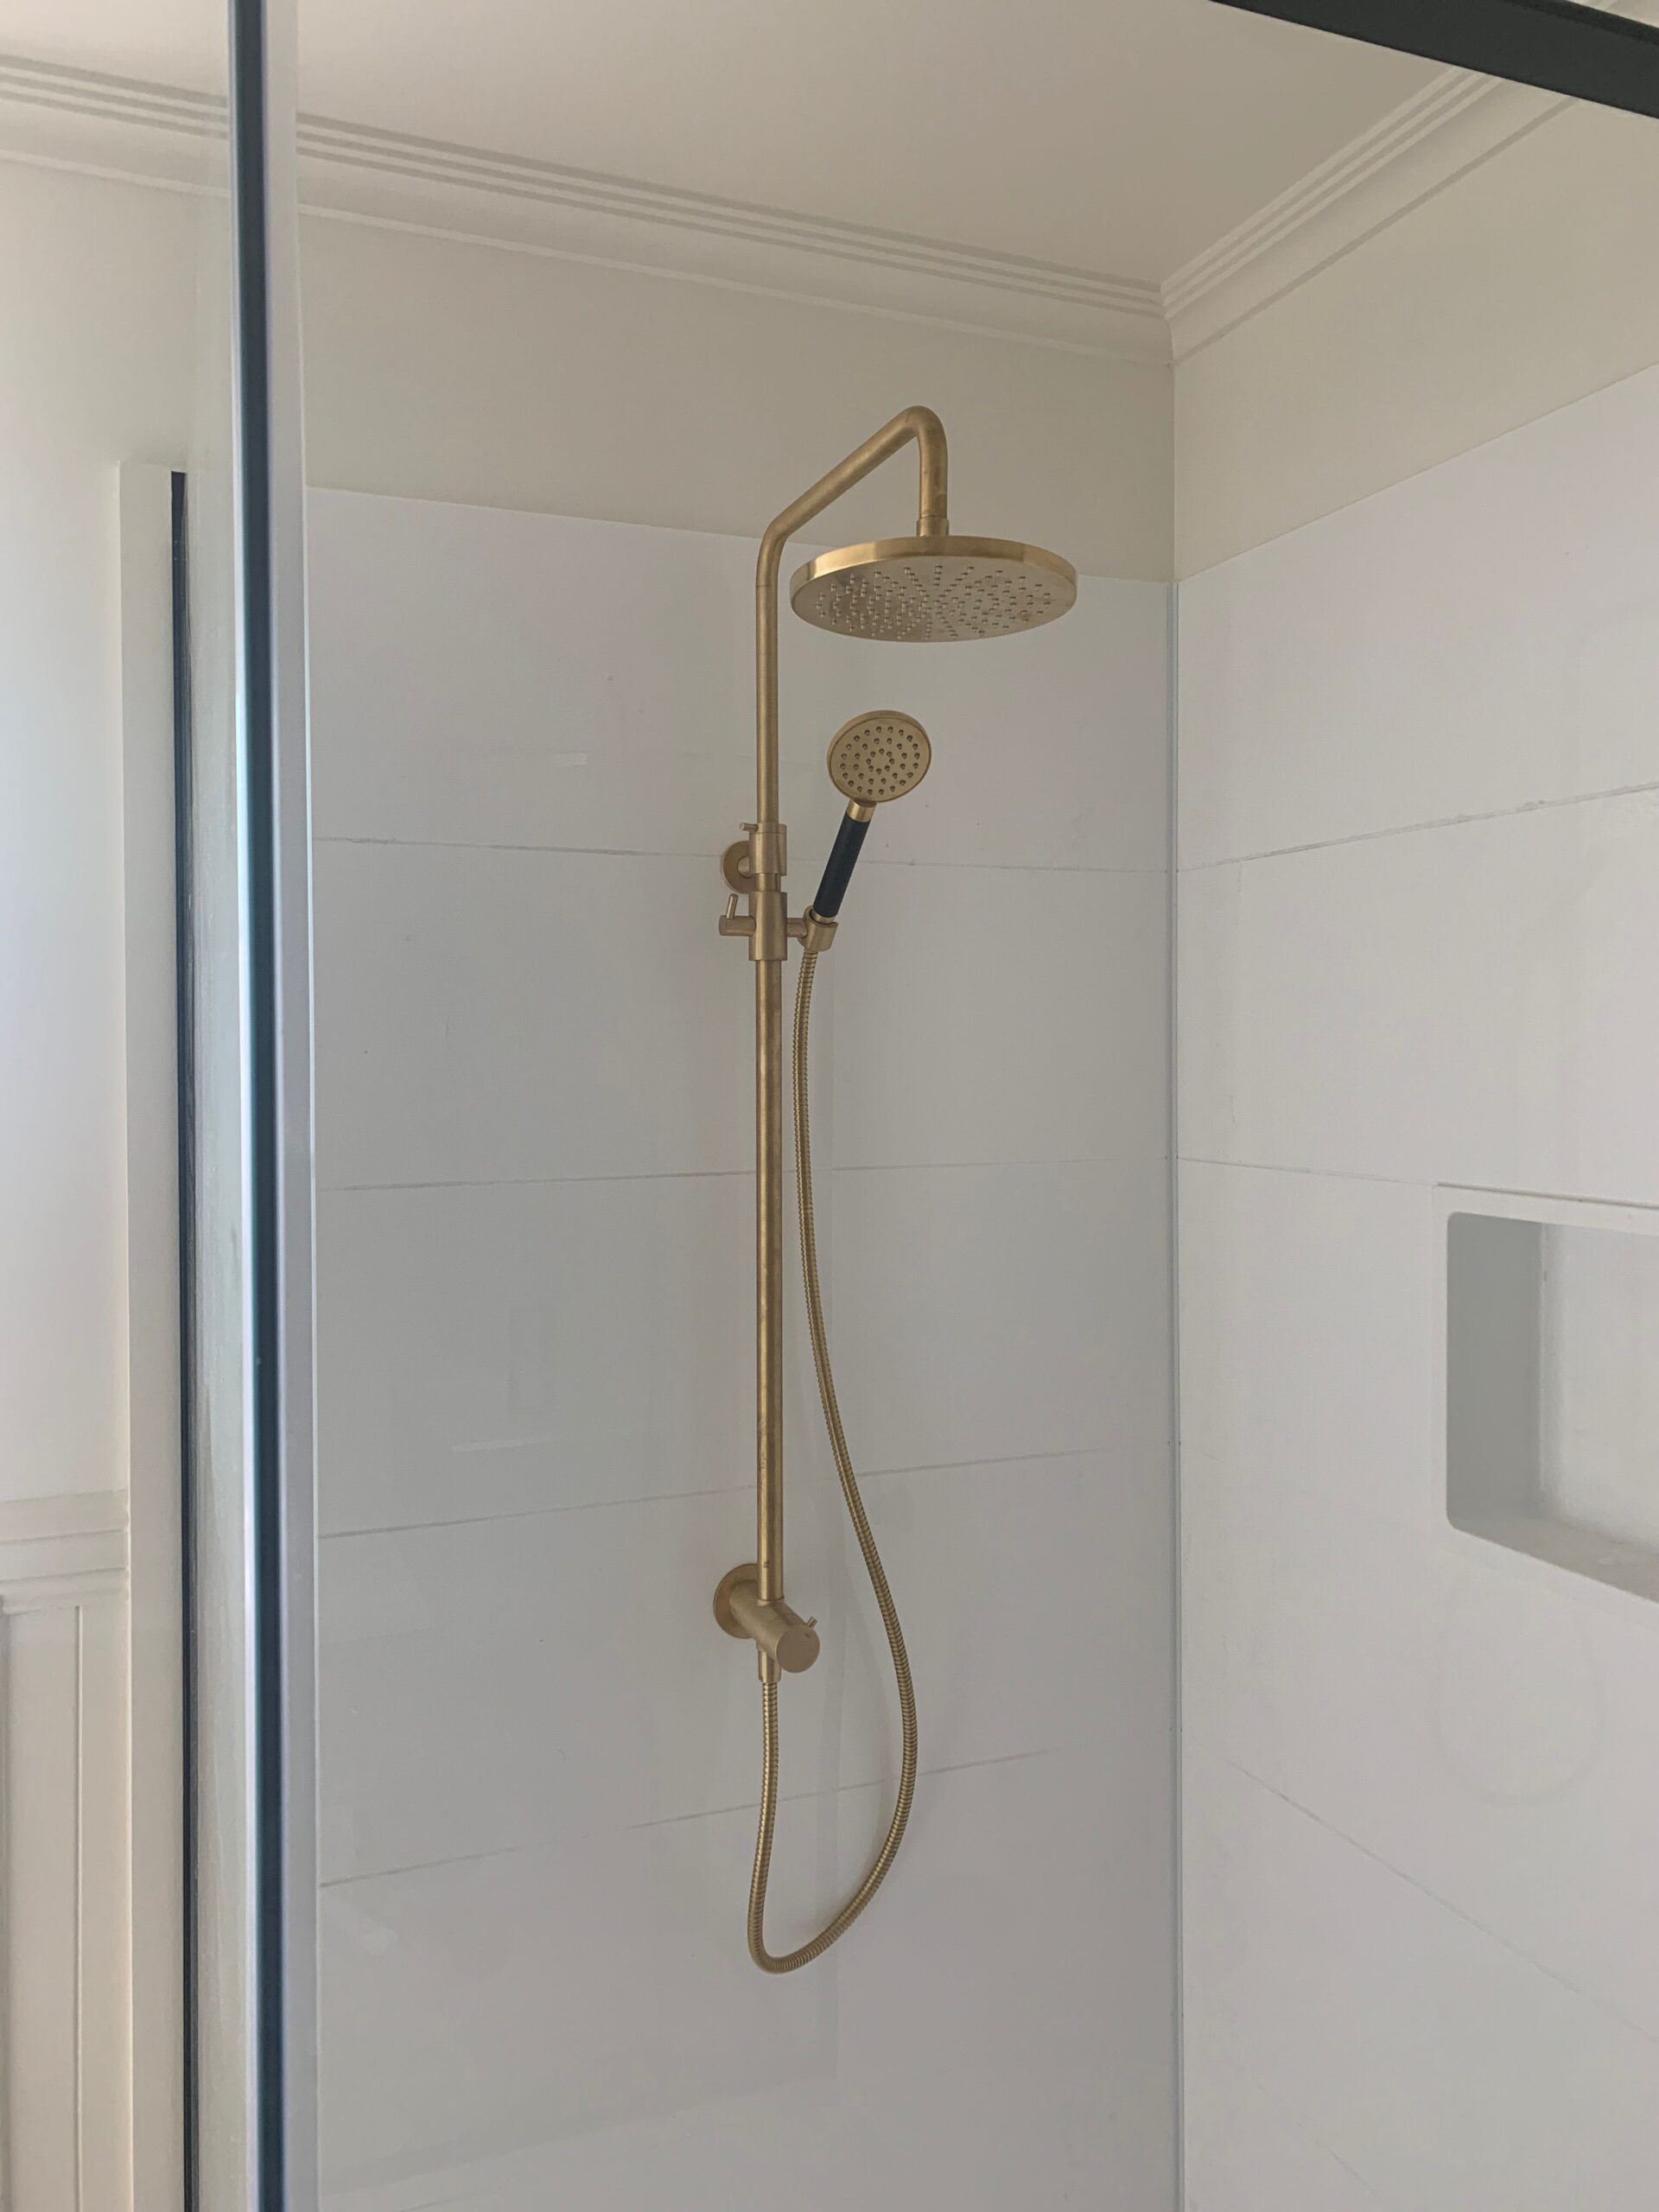 Bathroom Upgrades New Shower